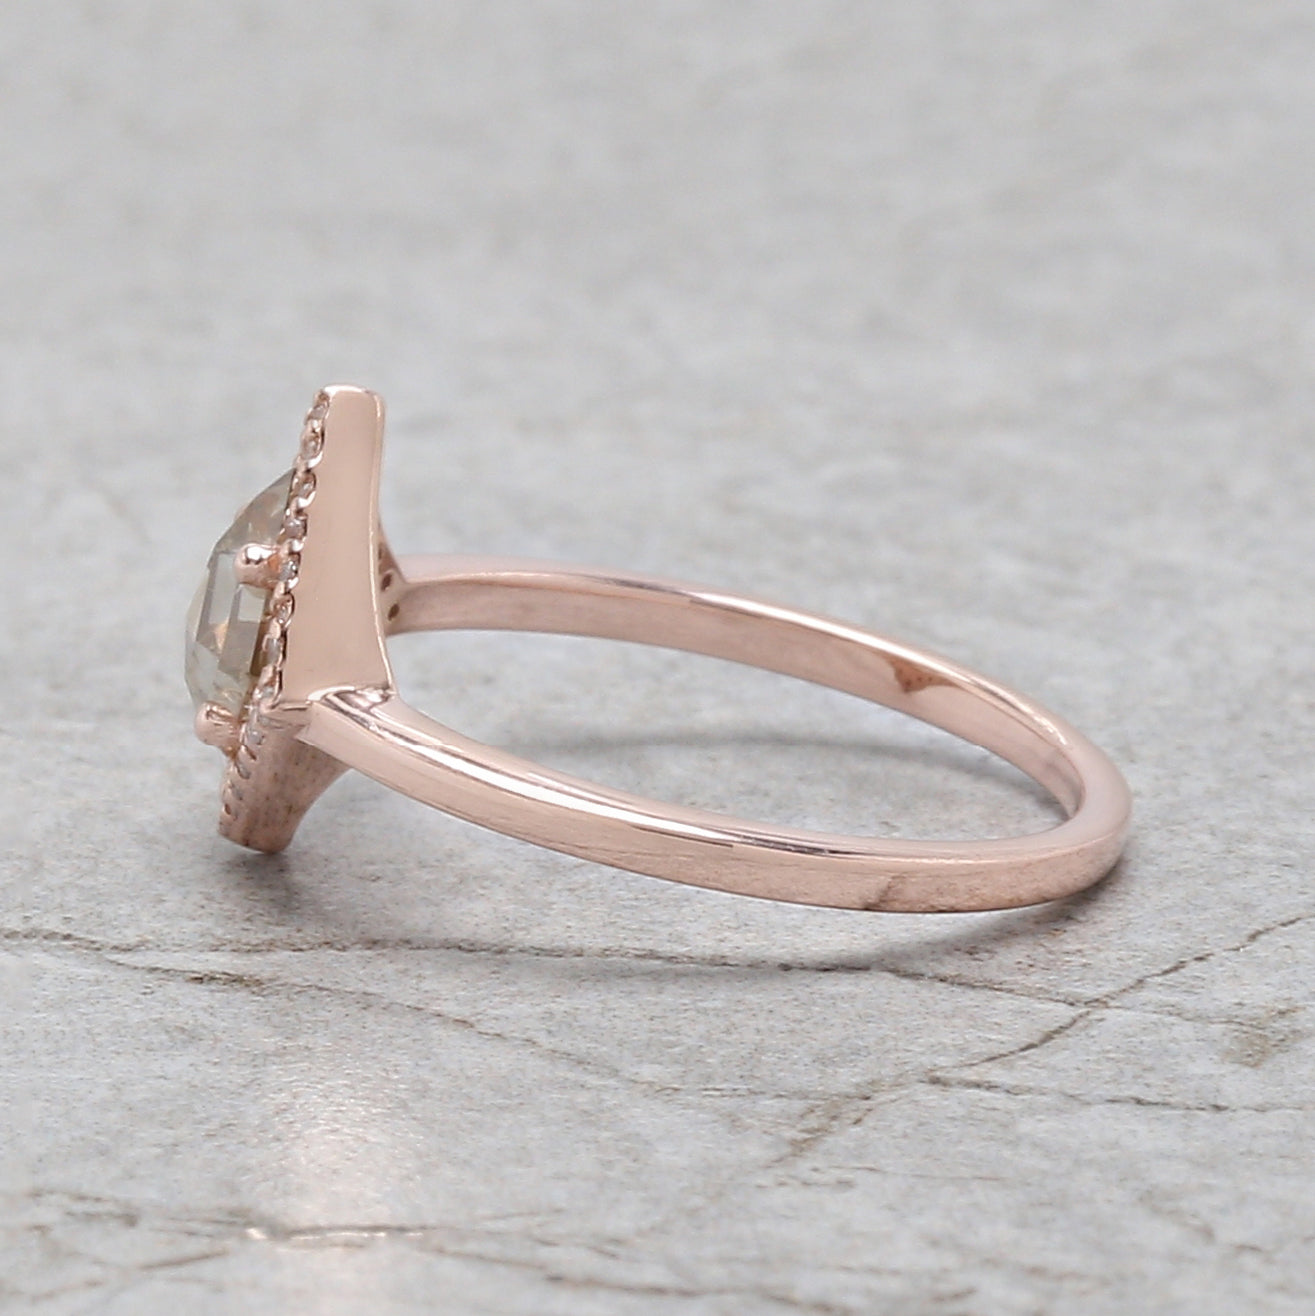 Kite Cut Brown Color Diamond Ring 0.59 Ct 6.80 MM Kite Shape Diamond Ring 14K Rose Gold Silver Kite Engagement Ring Gift For Her QN117